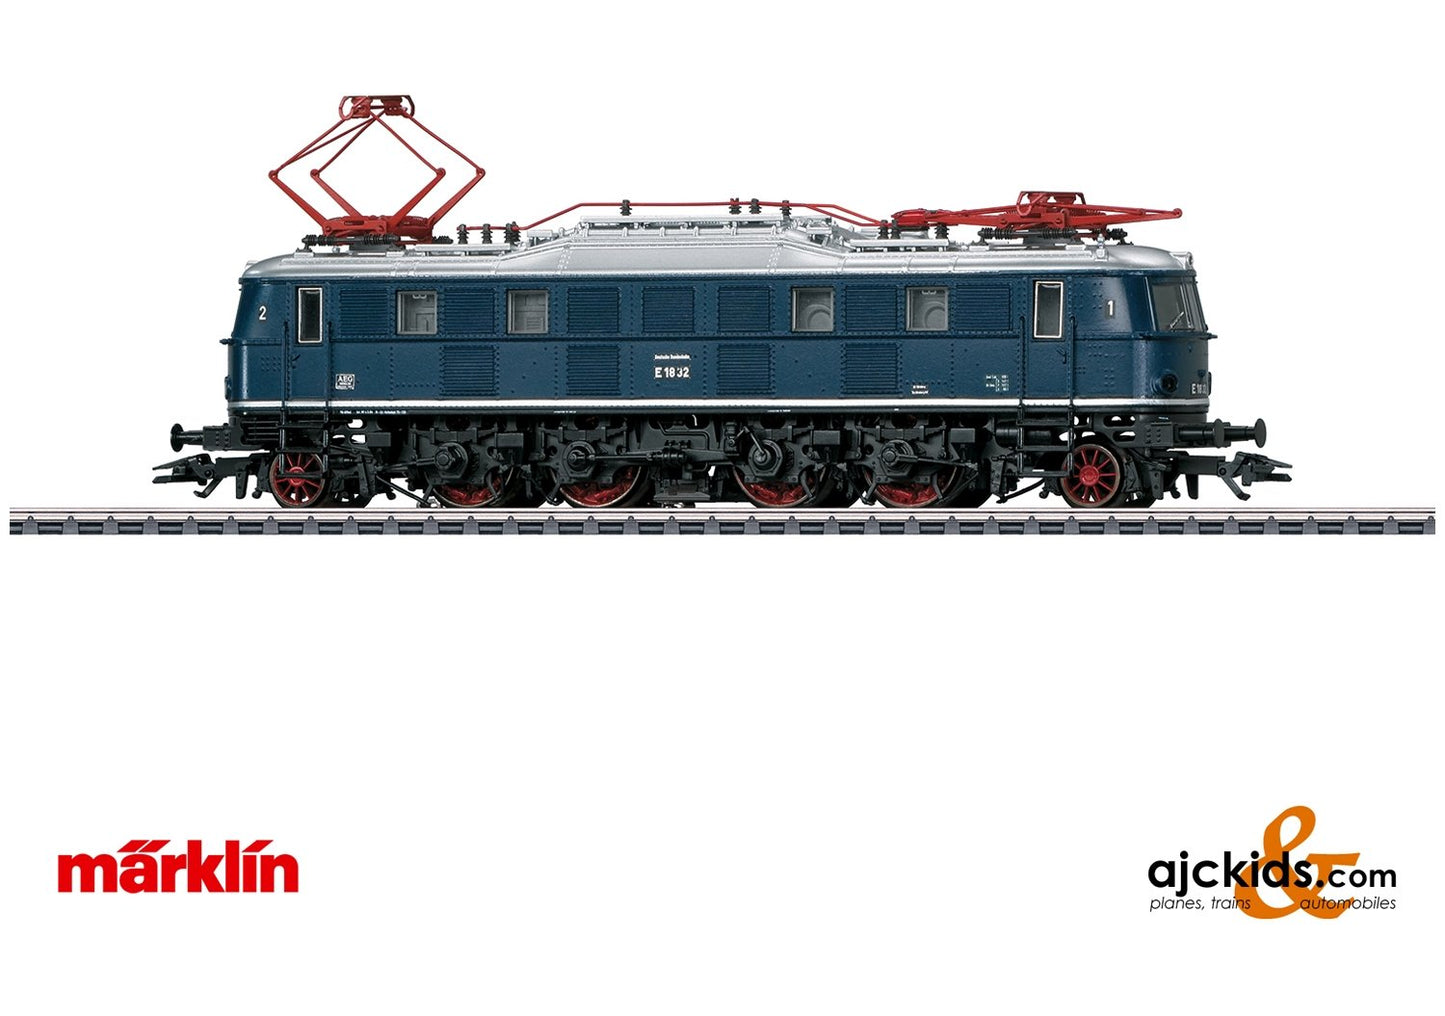 Marklin 39683 - Class E 18 Electric Locomotive